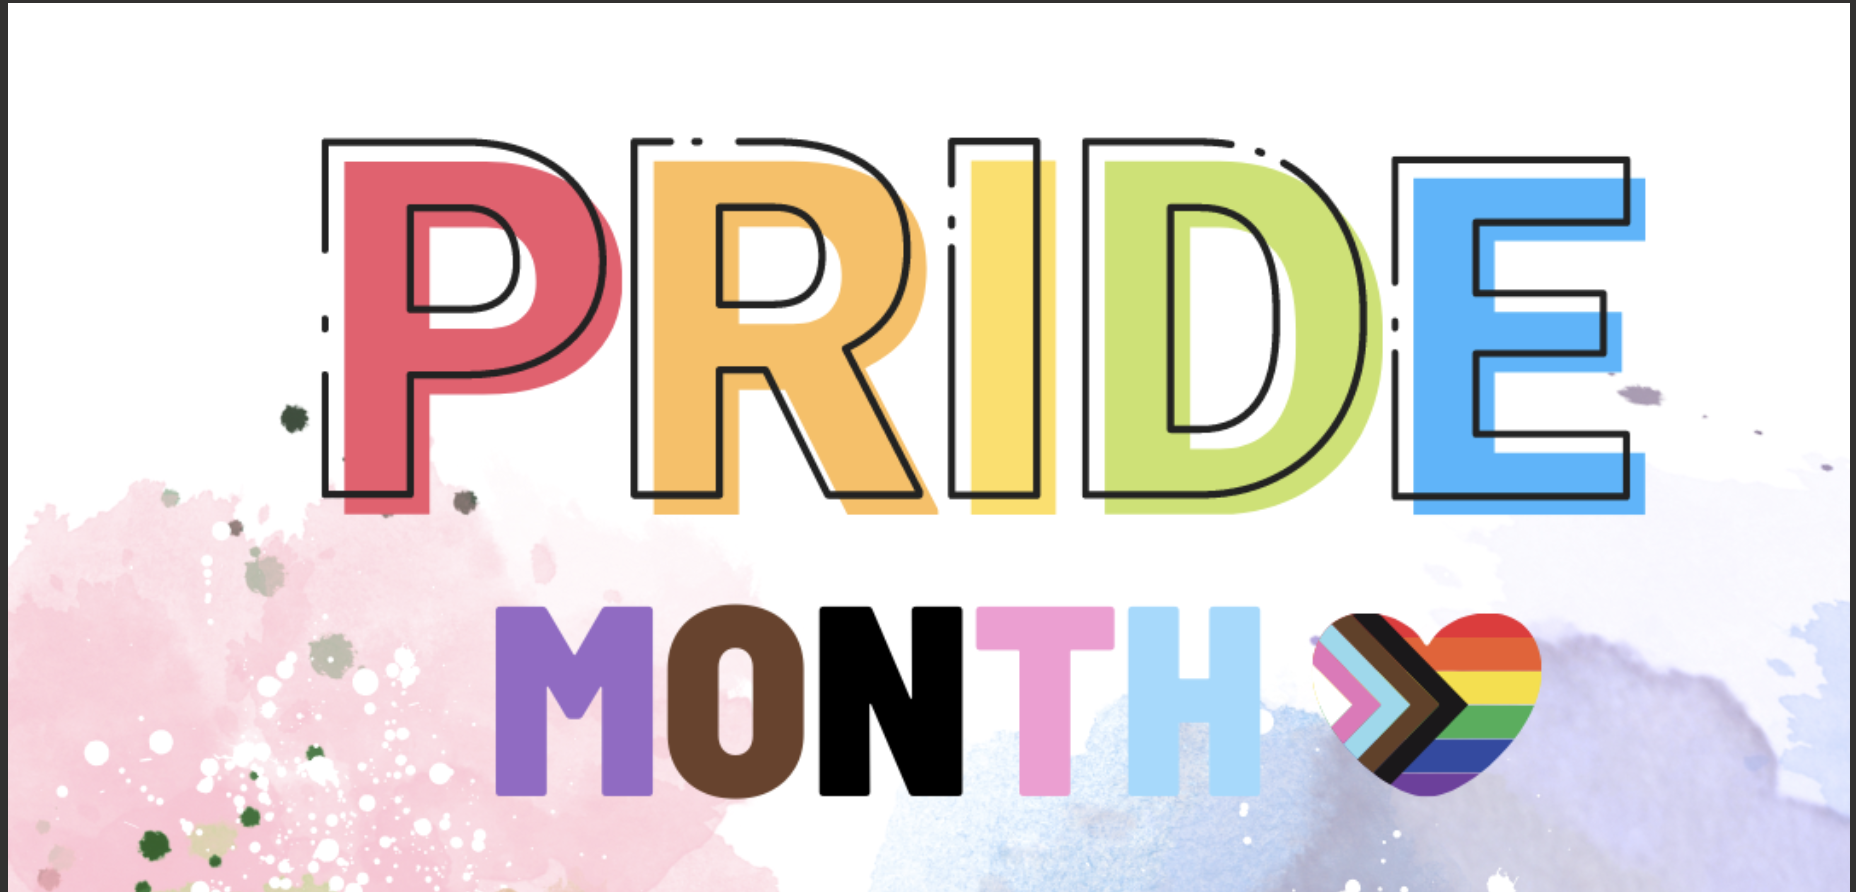 Pride Month 2022